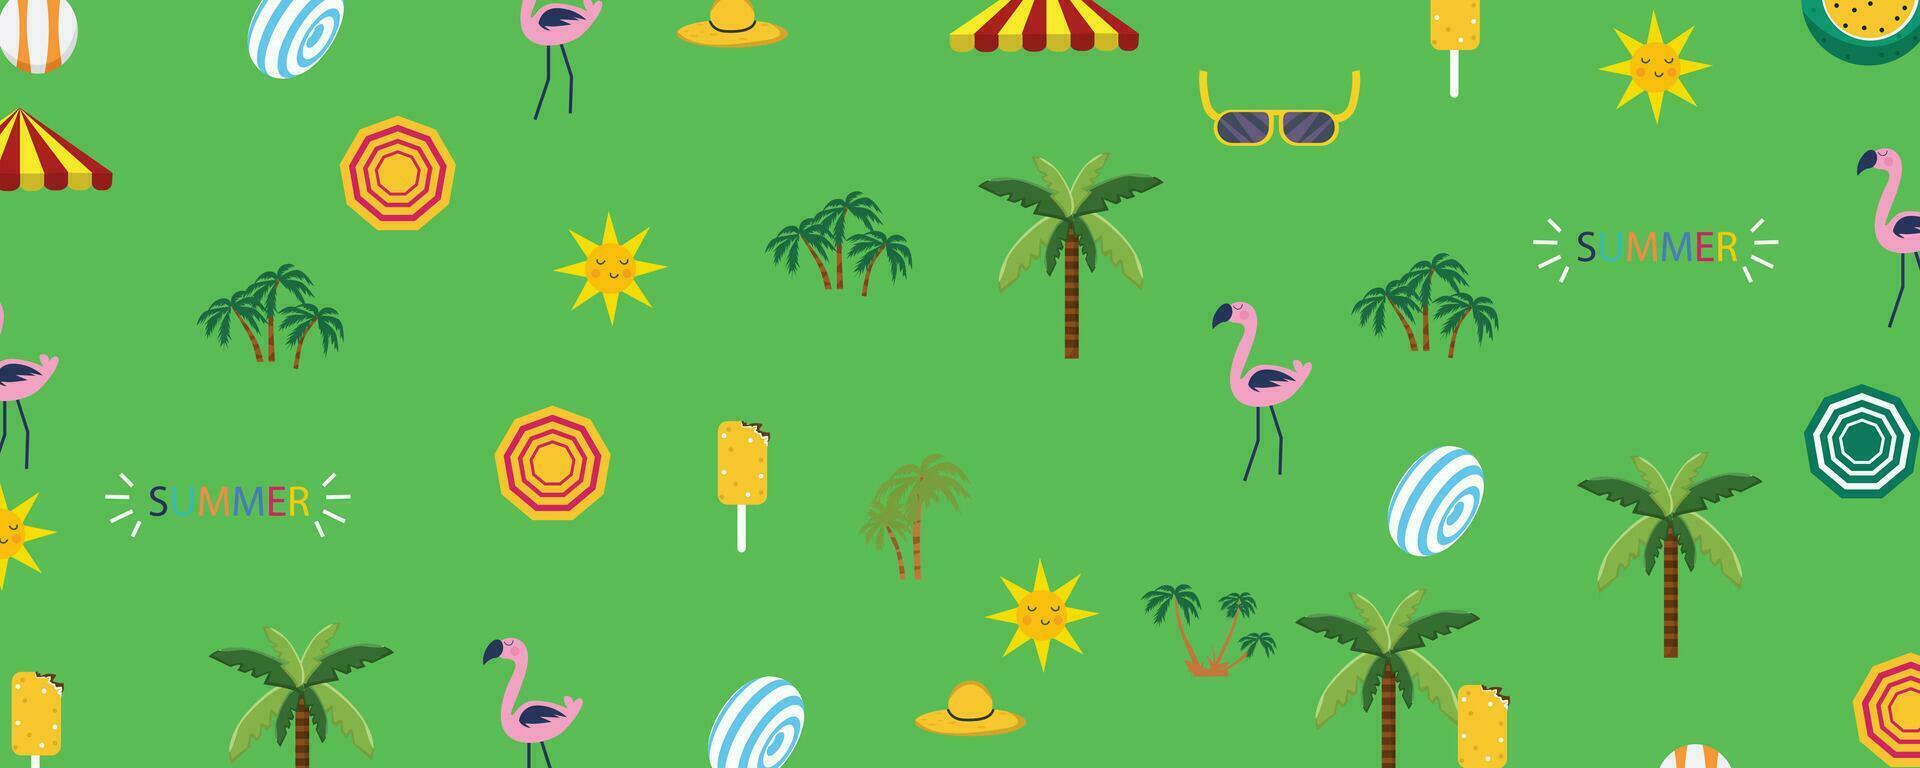 naadloos zomer patroon strand elementen zo net zo zonnebril, palm, watermeloen plak, tote tas, paraplu, ijs room, golven, zand. mode afdrukken ontwerp vector